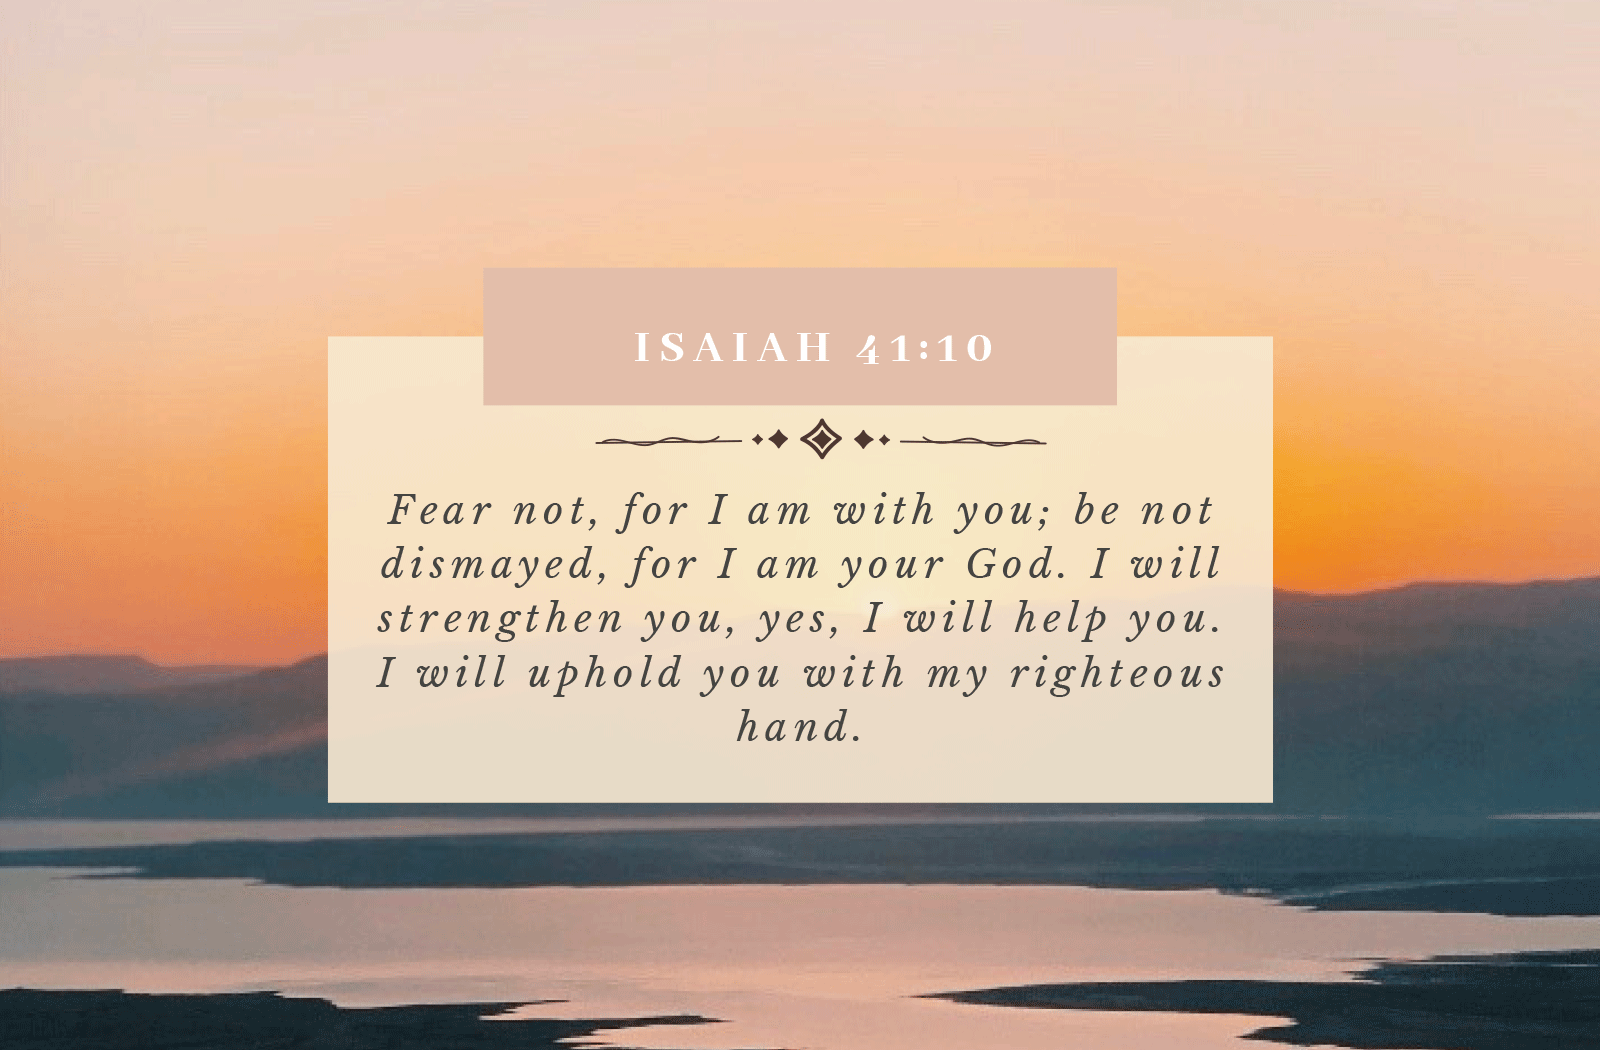 Do not fear I will help you  Isaiah 4113  Sunday Social